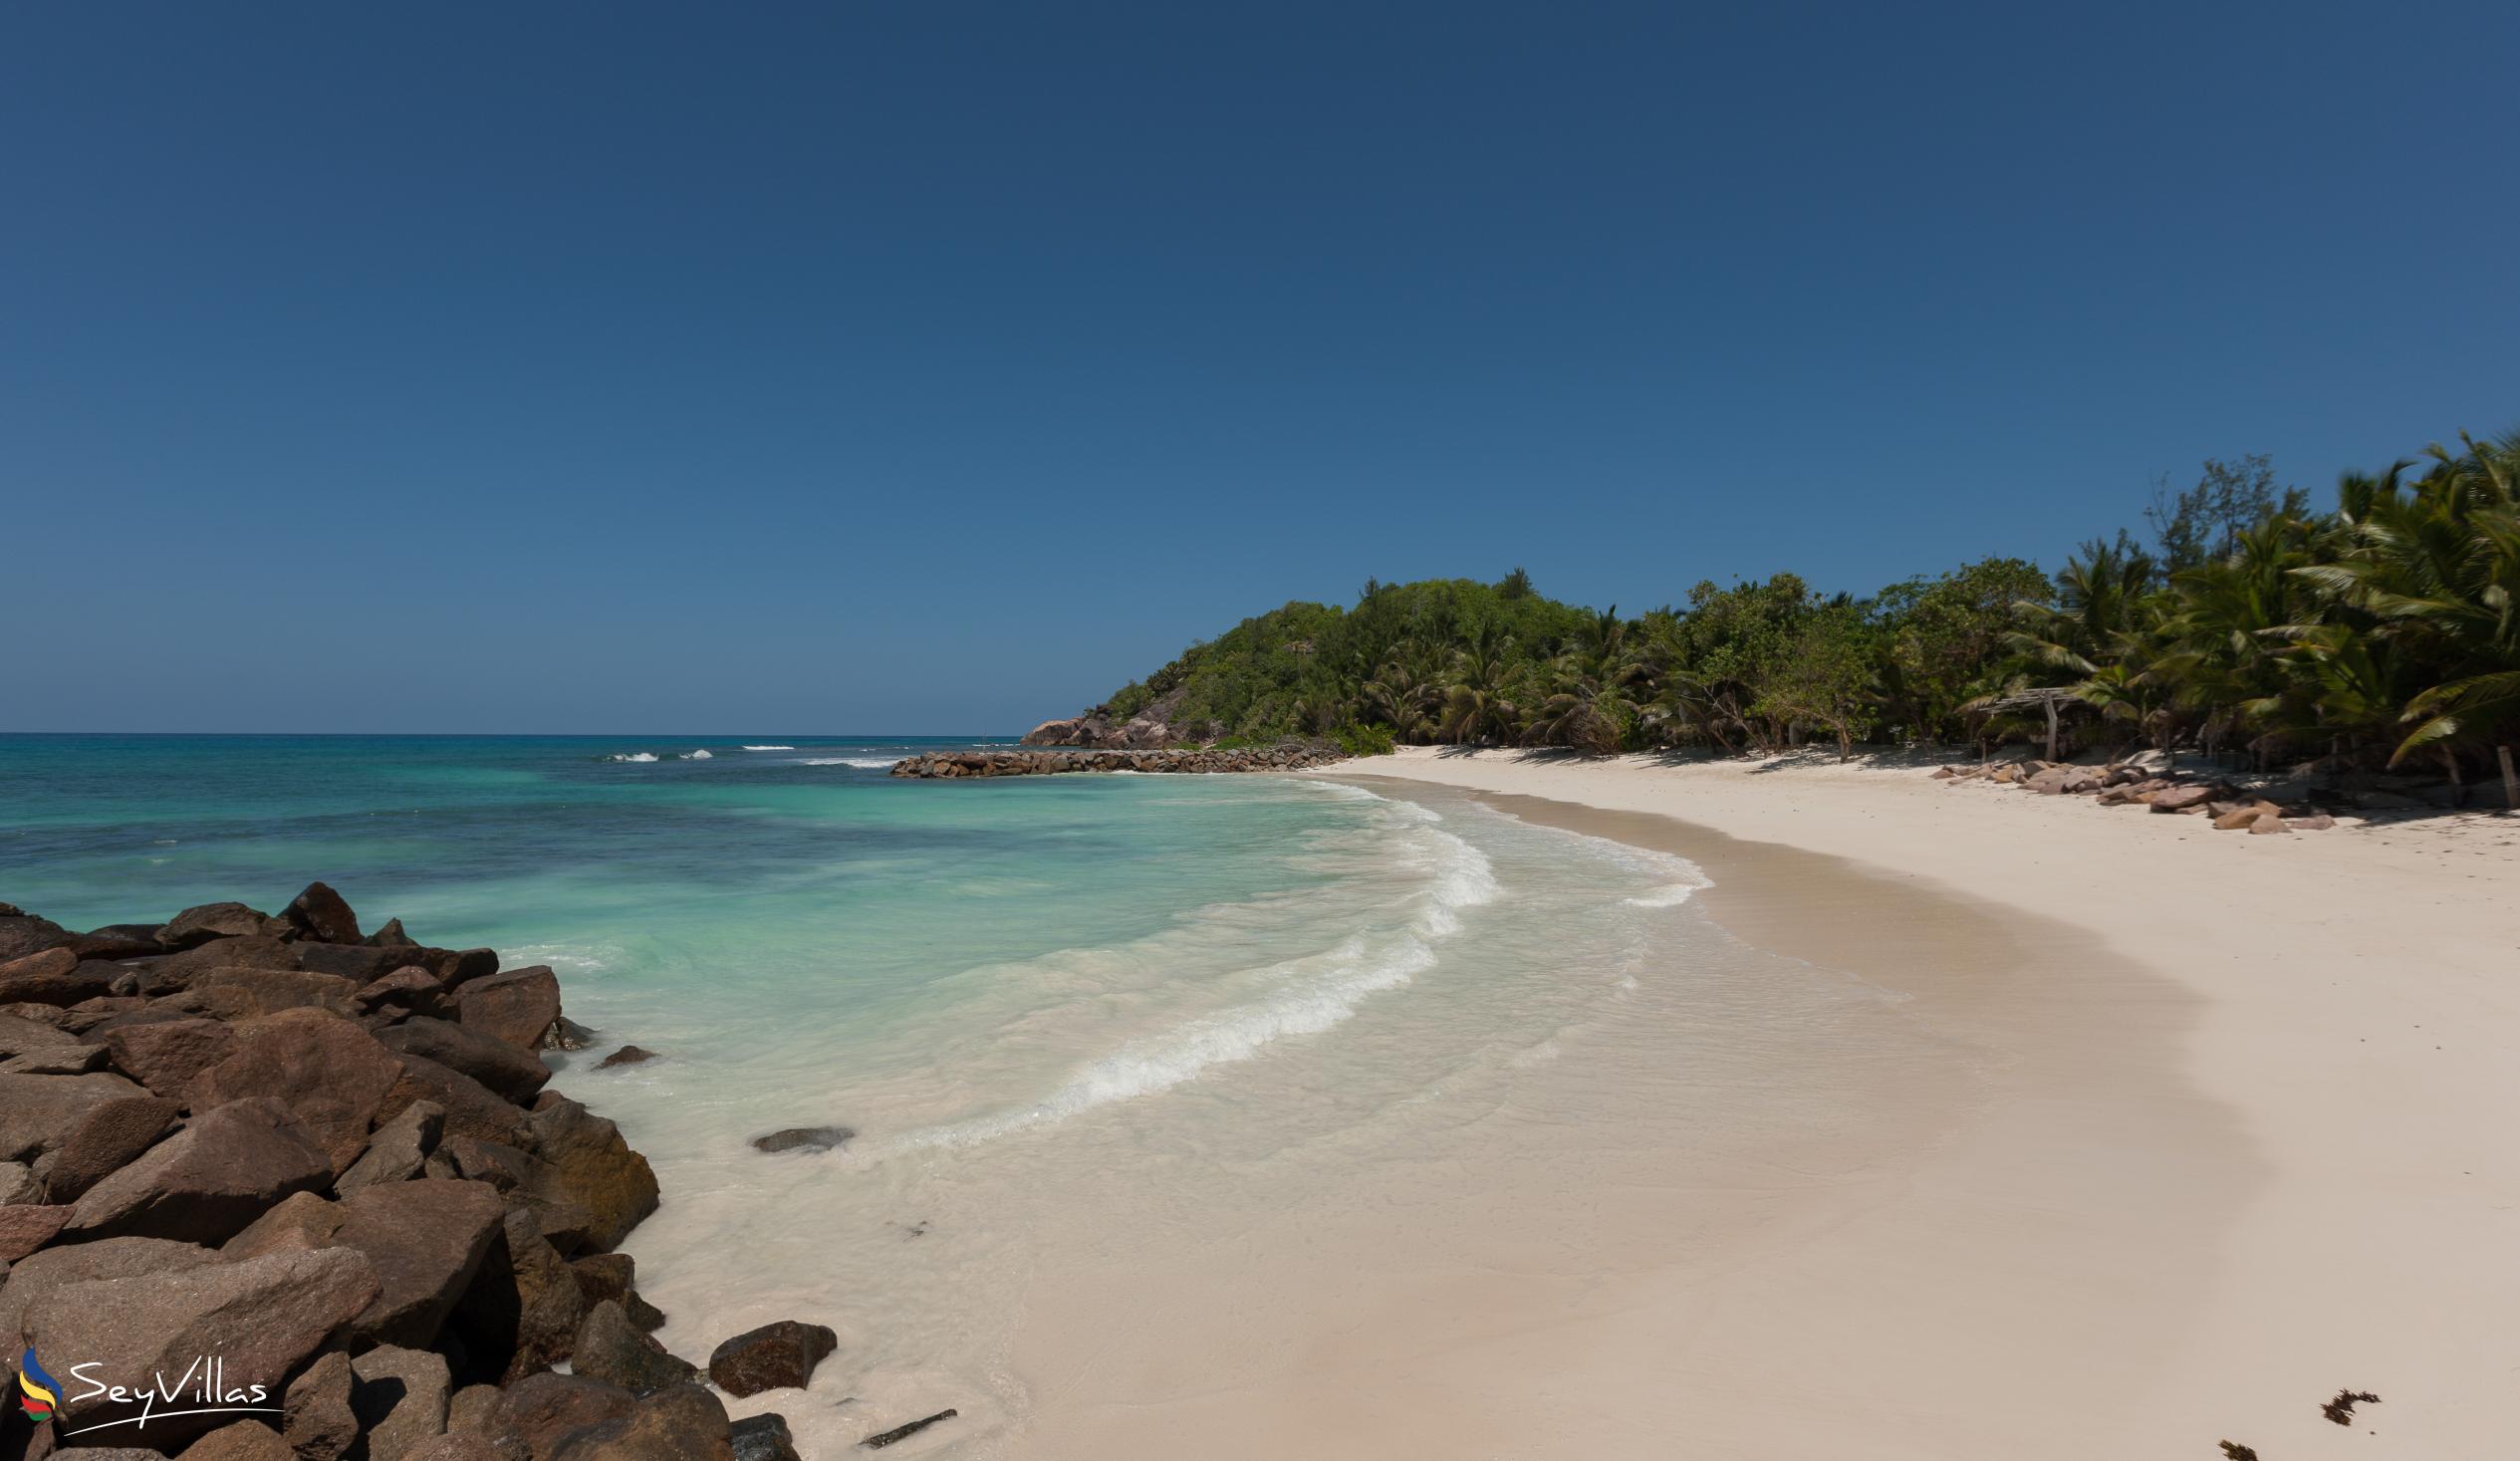 Foto 36: Villa Belle Plage - Location - Praslin (Seychelles)